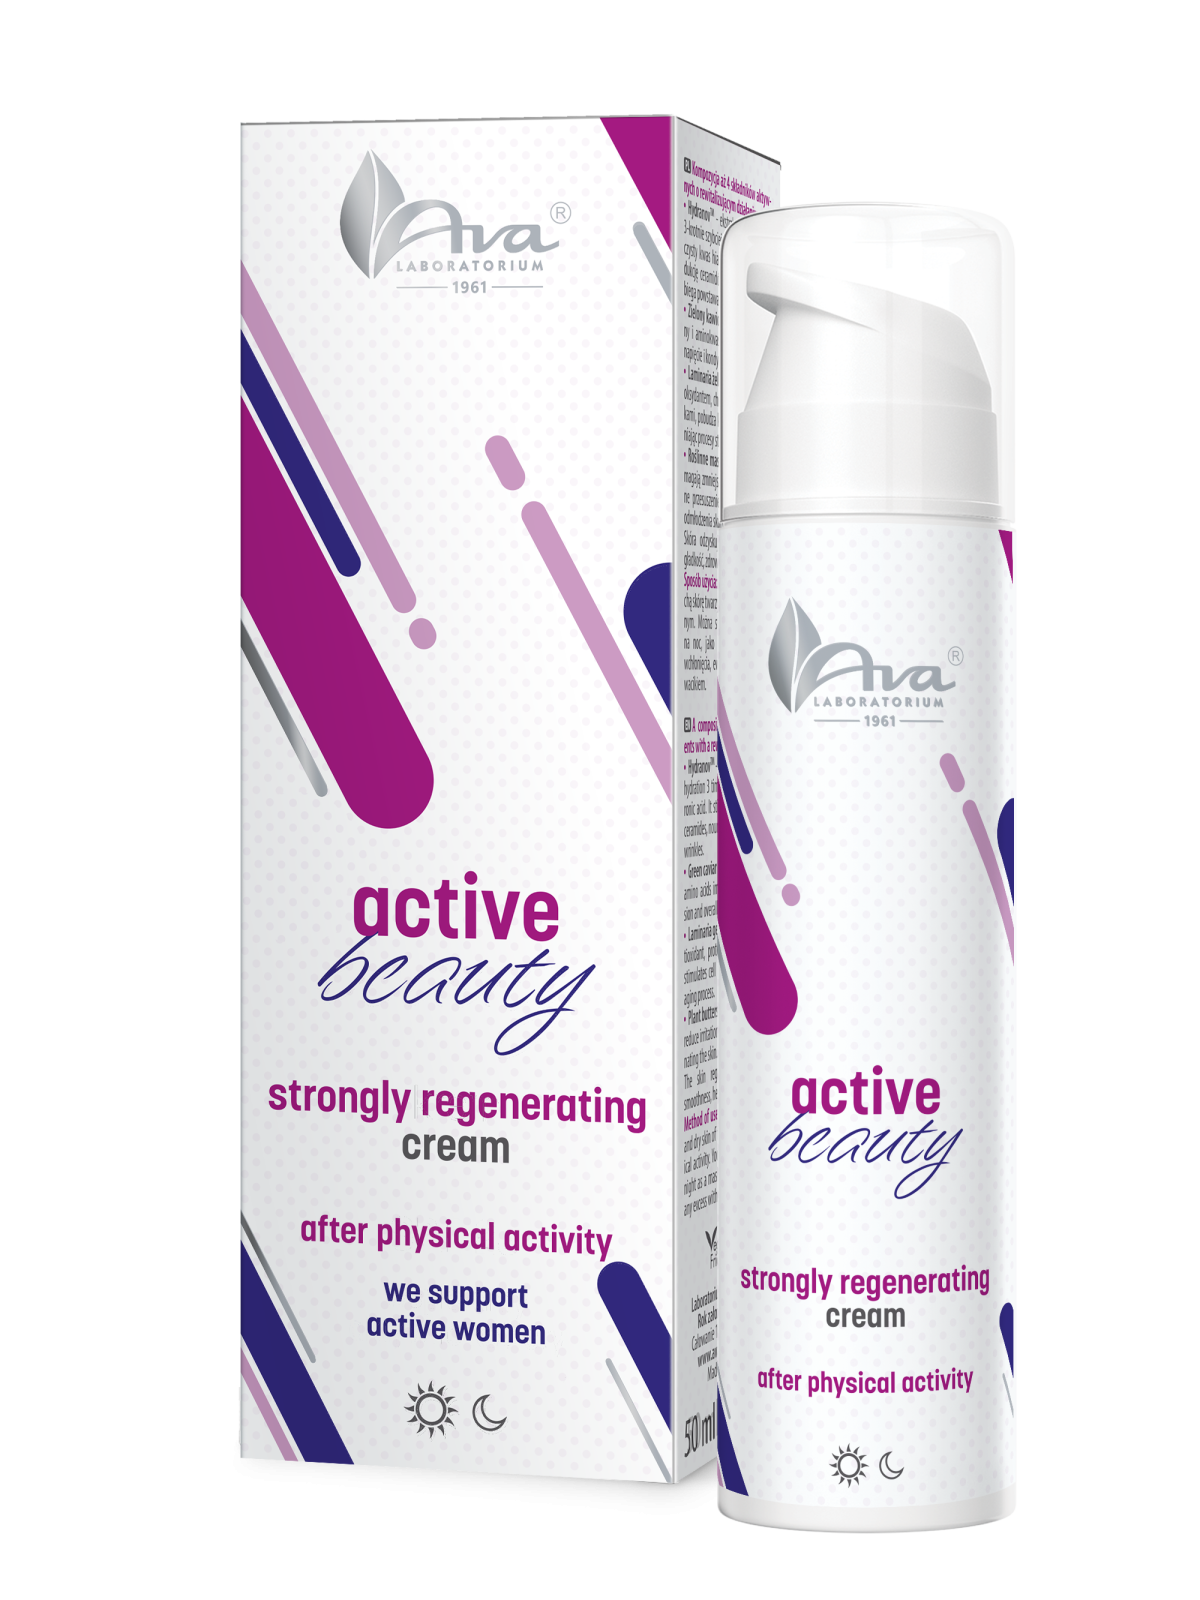 Active Beauty Strongly regenerating cream